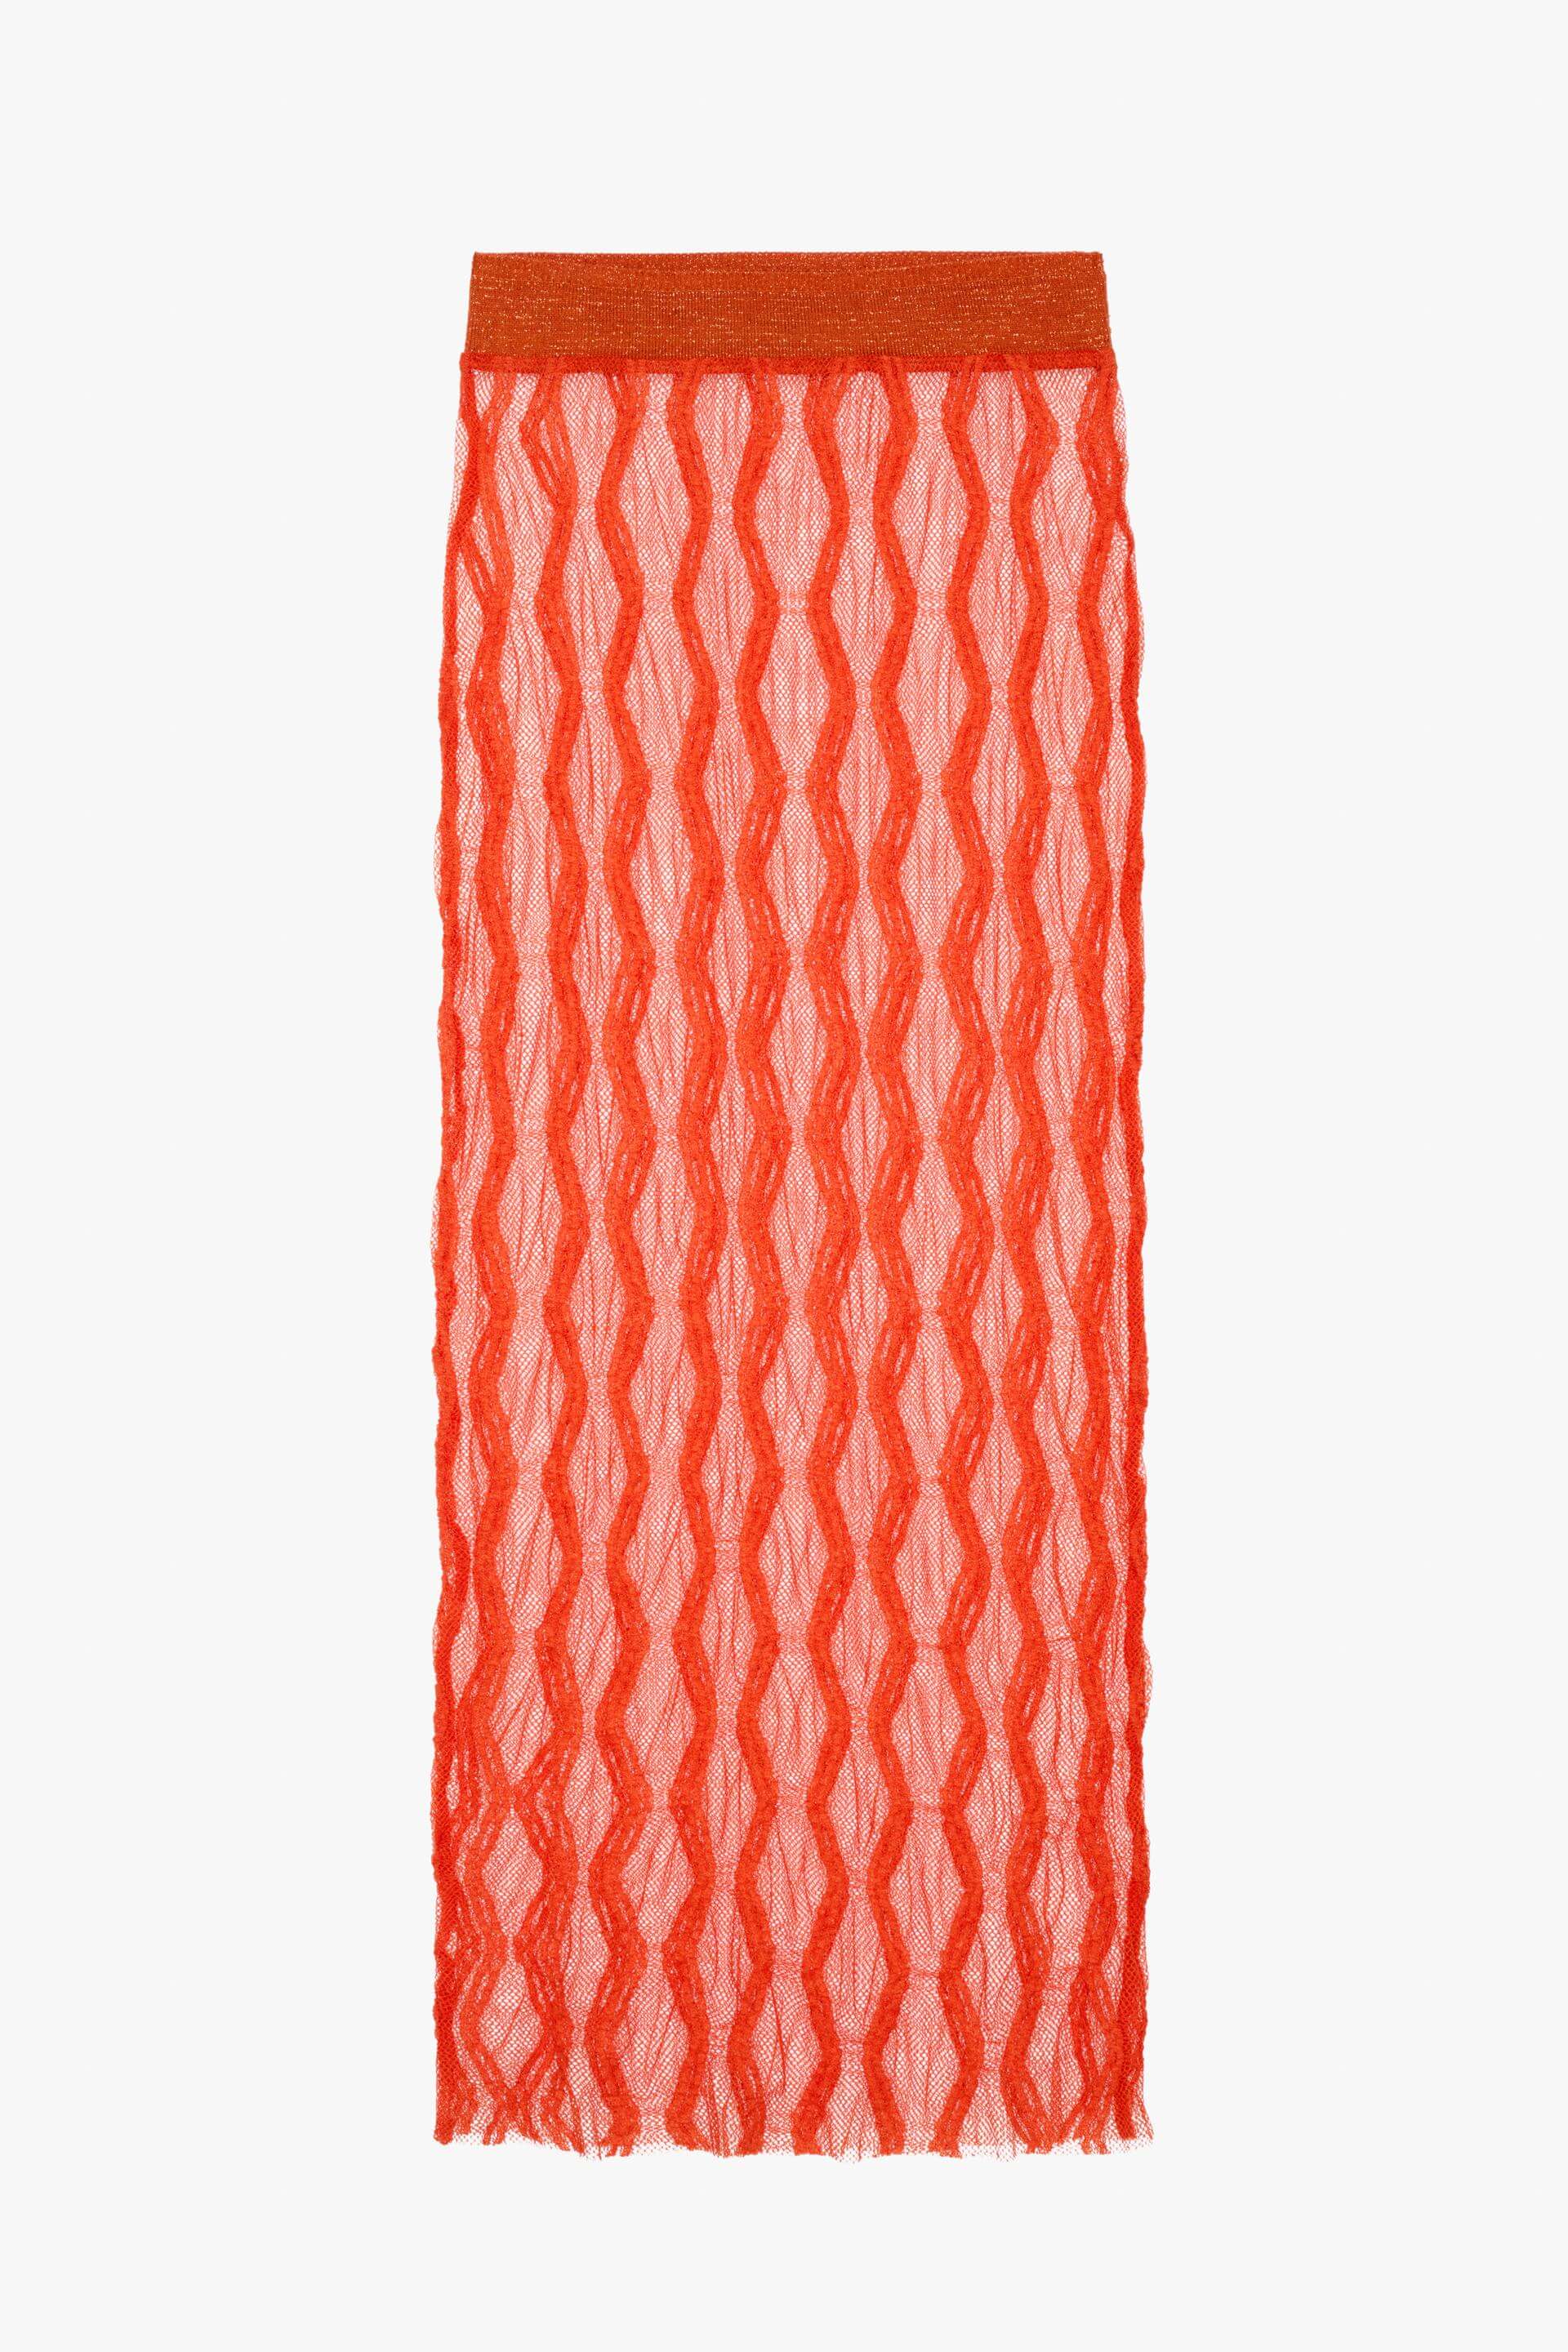 Юбка Zara Knit - Limited Edition, оранжевый юбка zara wool blend limited edition розовый